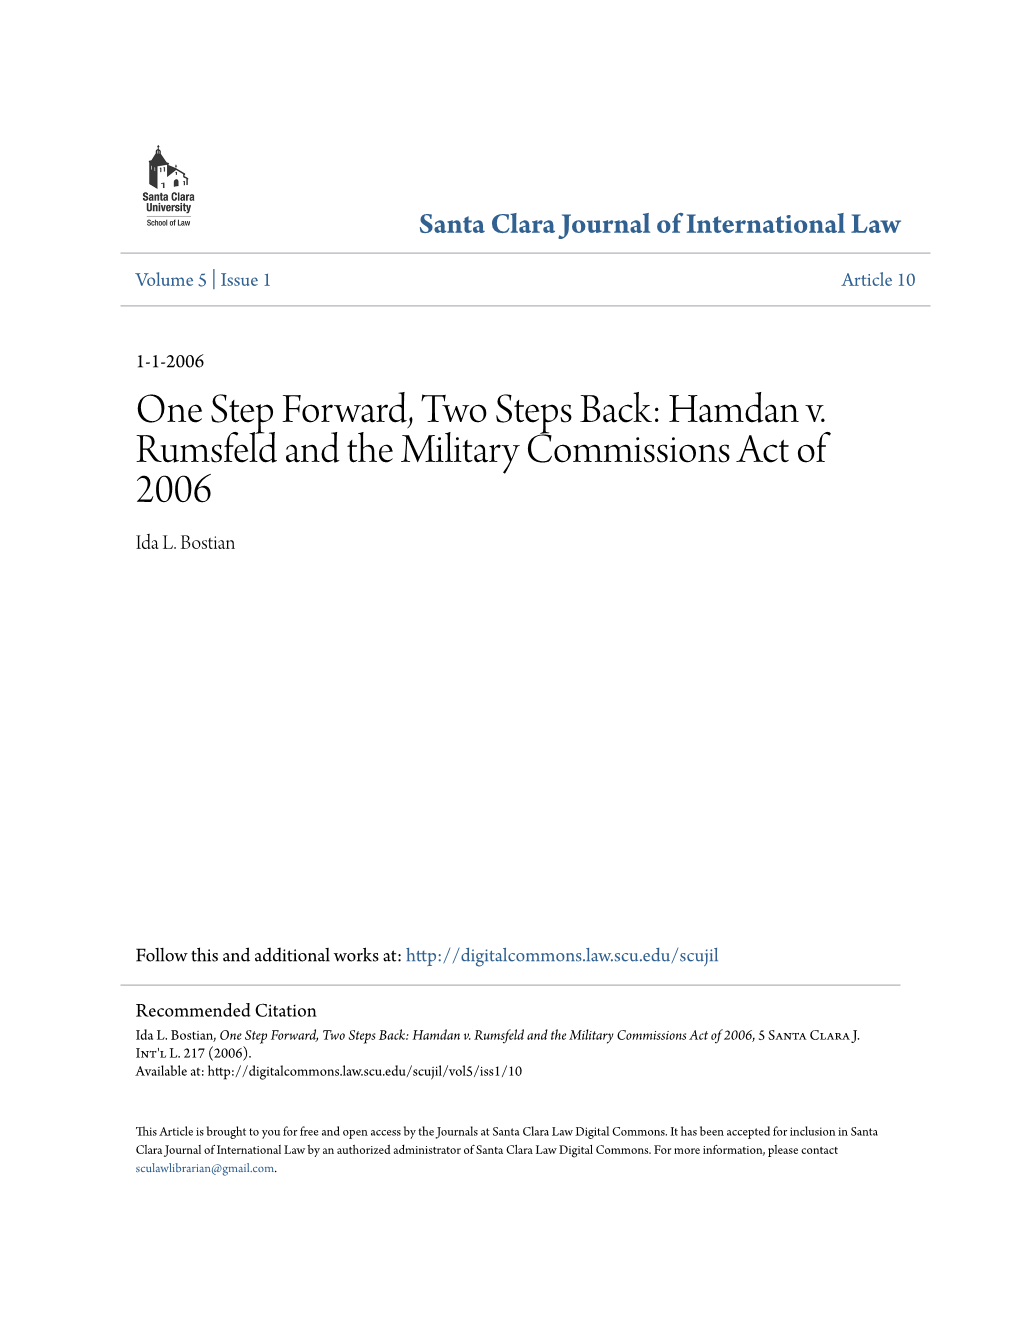 Hamdan V. Rumsfeld and the Military Commissions Act of 2006 Ida L